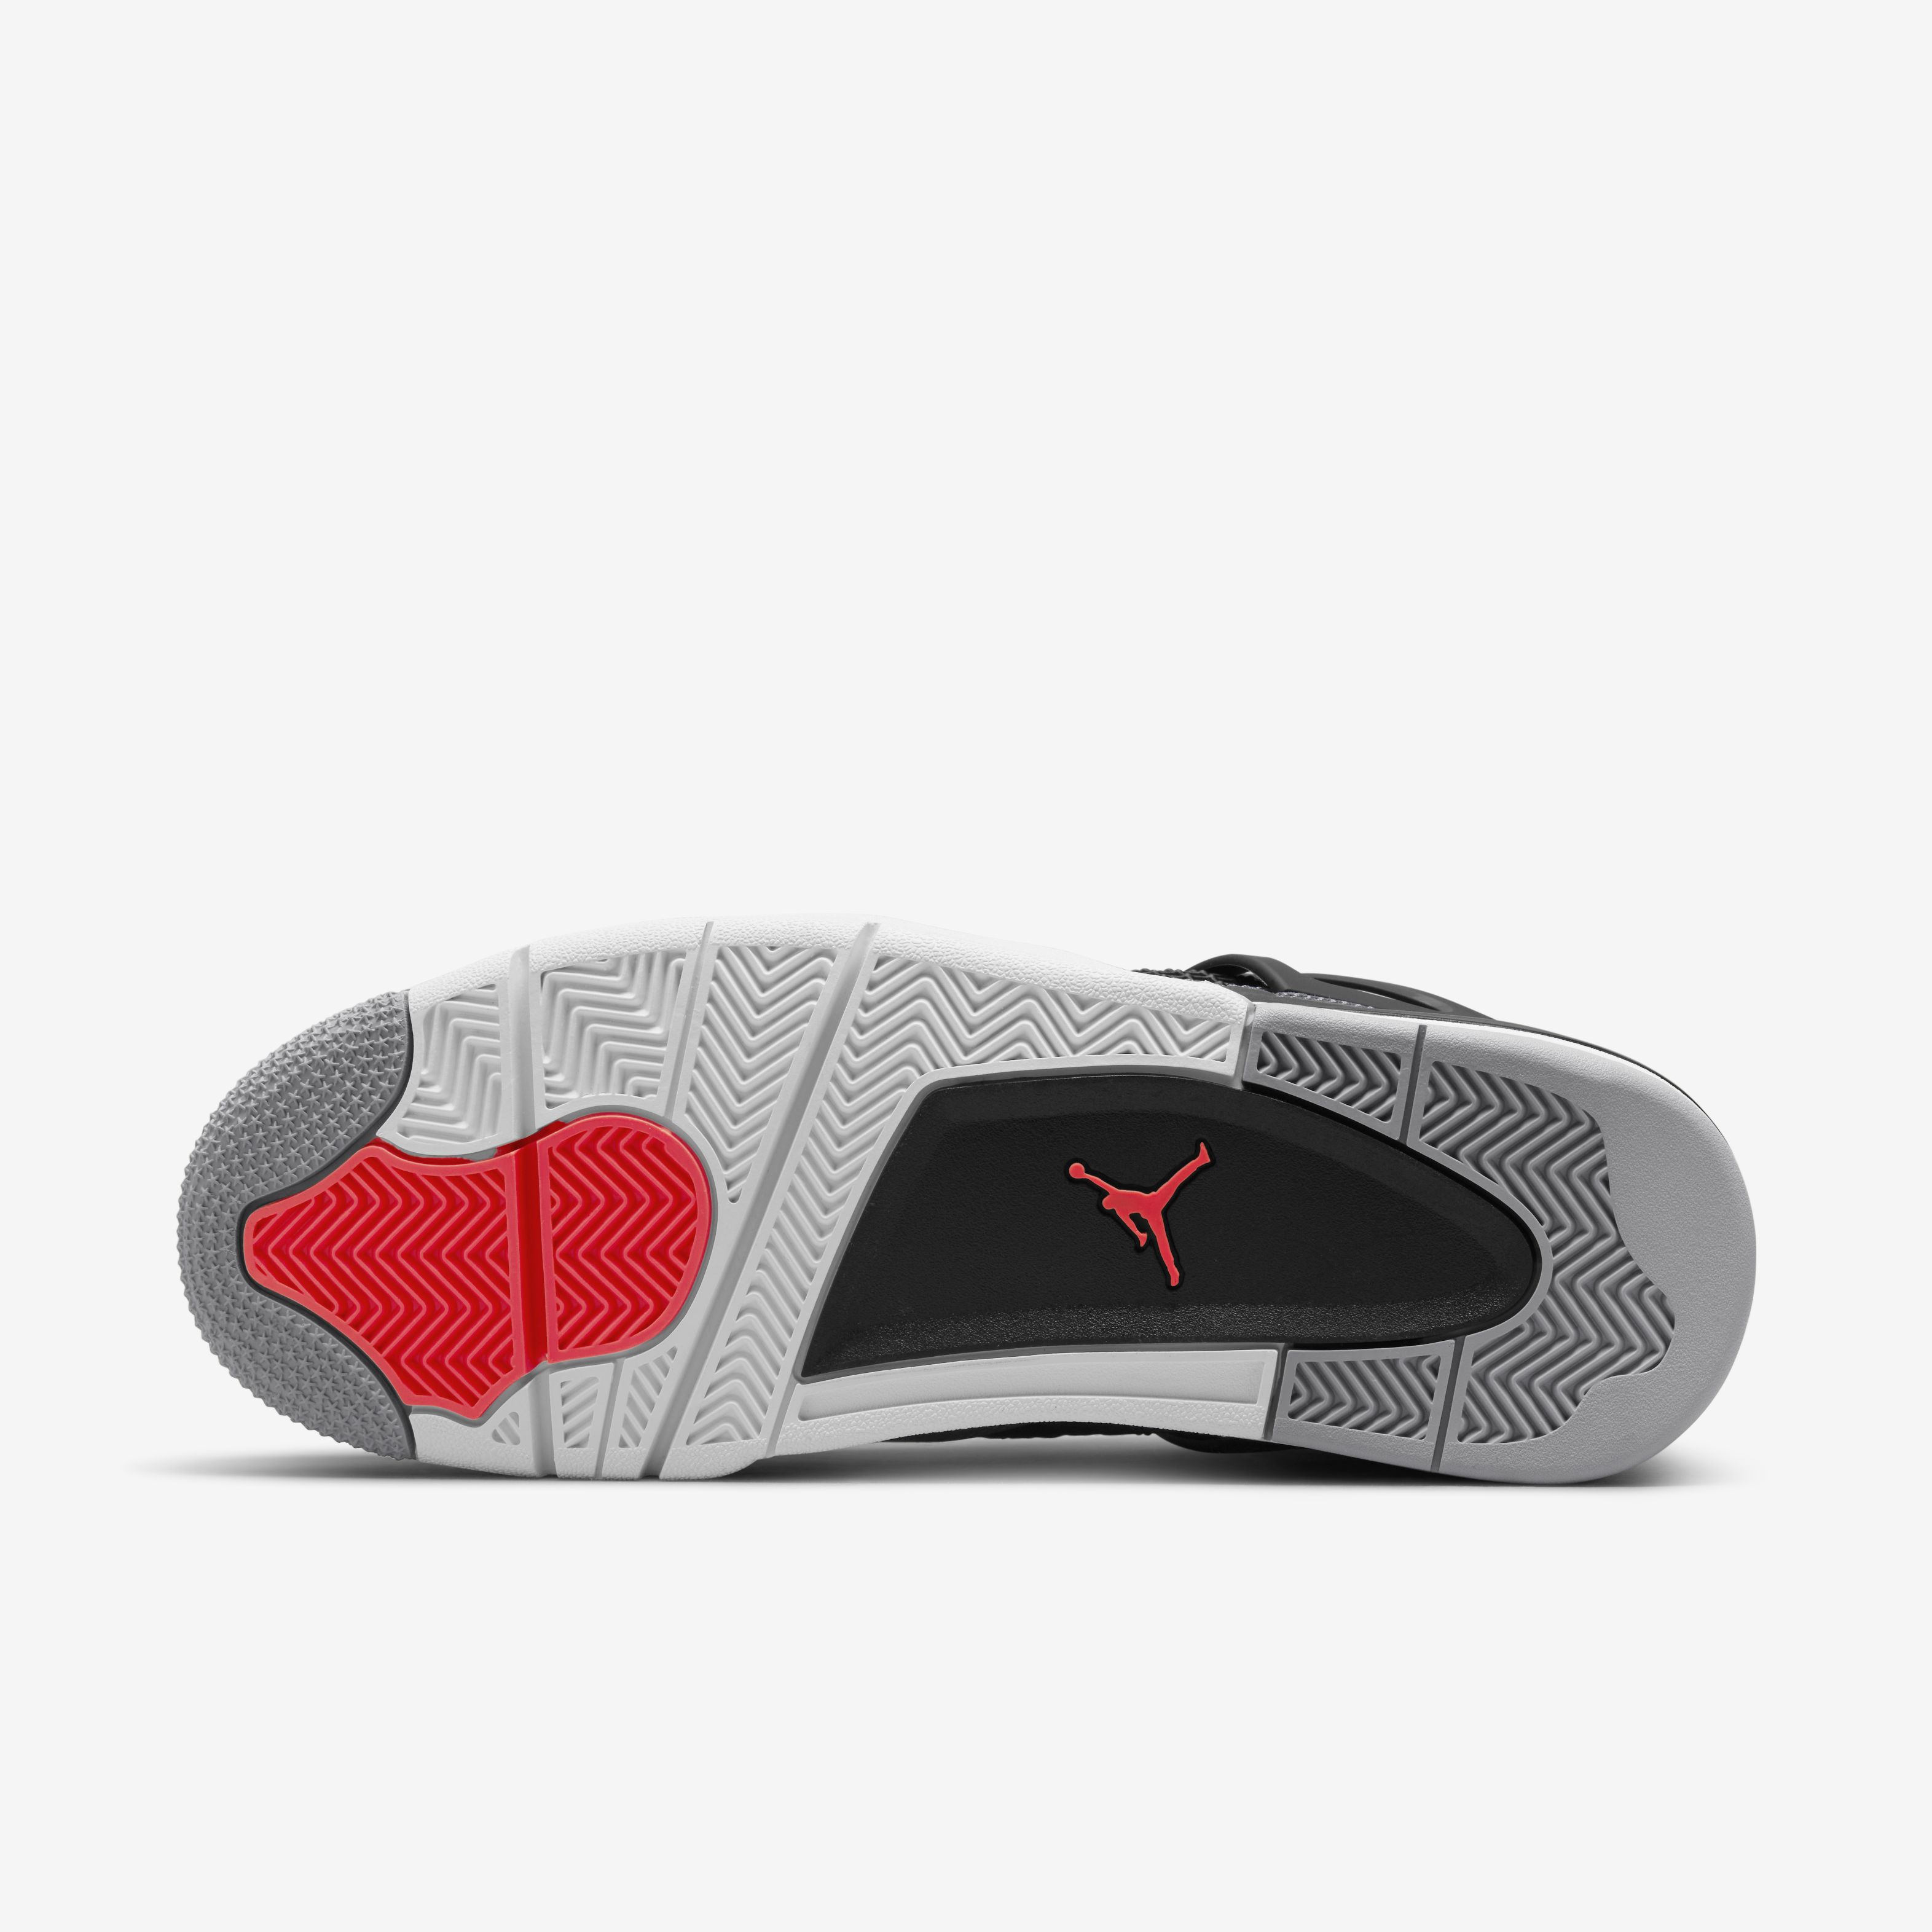 Air Jordan 4 Retro - calzado - SNKRS - Nike Chile